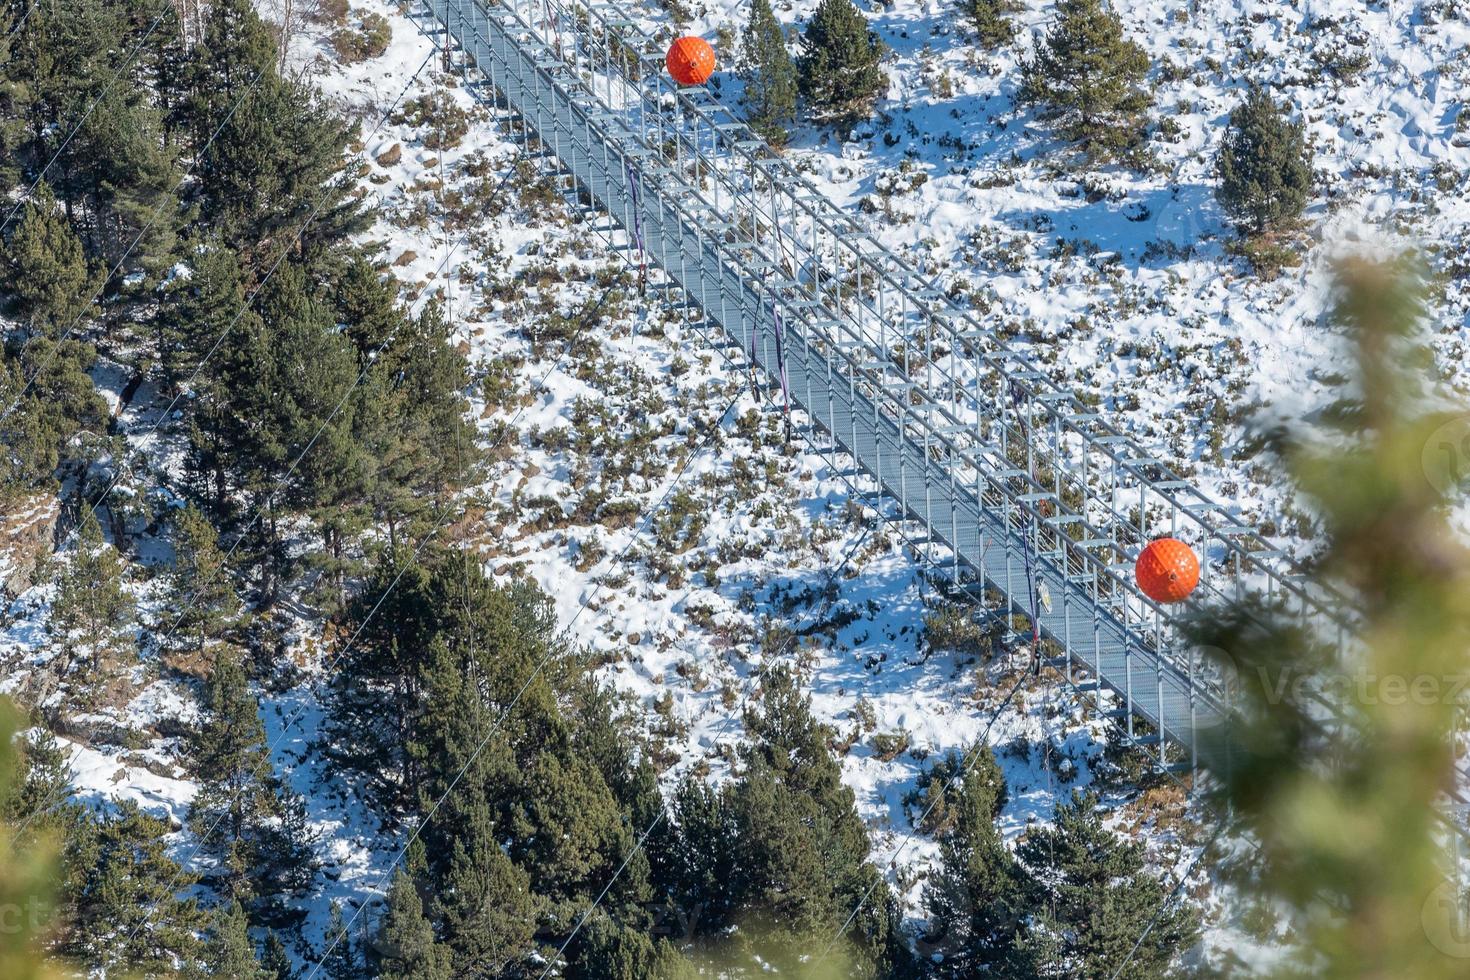 Canillo Tibetan Bridge in Andorra under Construction in December 2021 photo